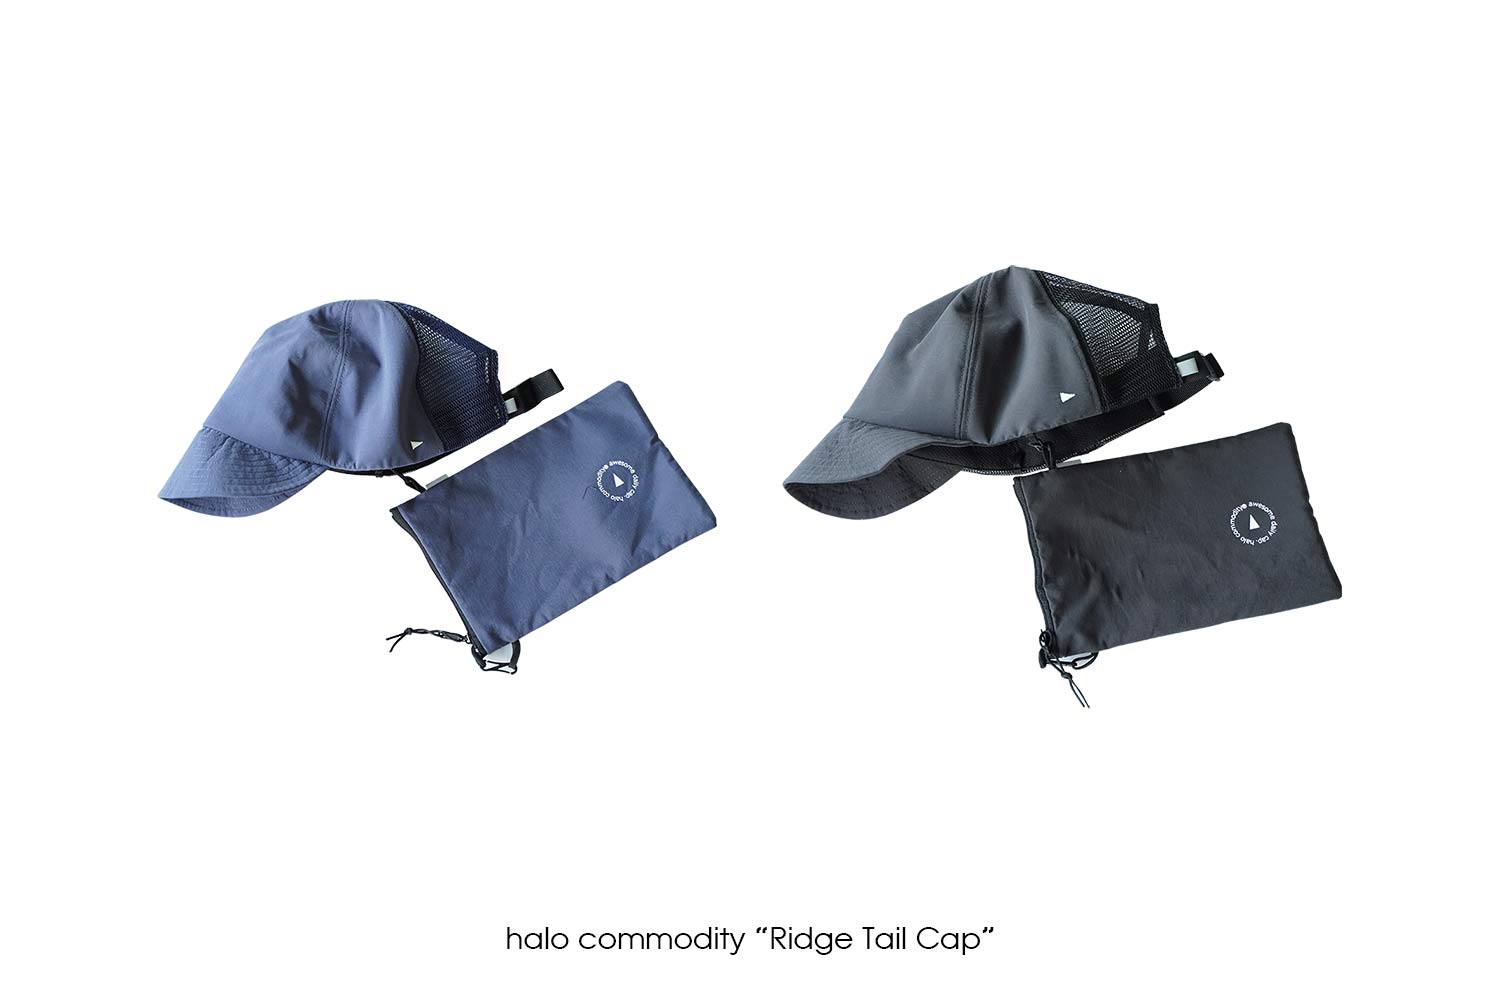 halo commodity "Ridge Tail Cap"